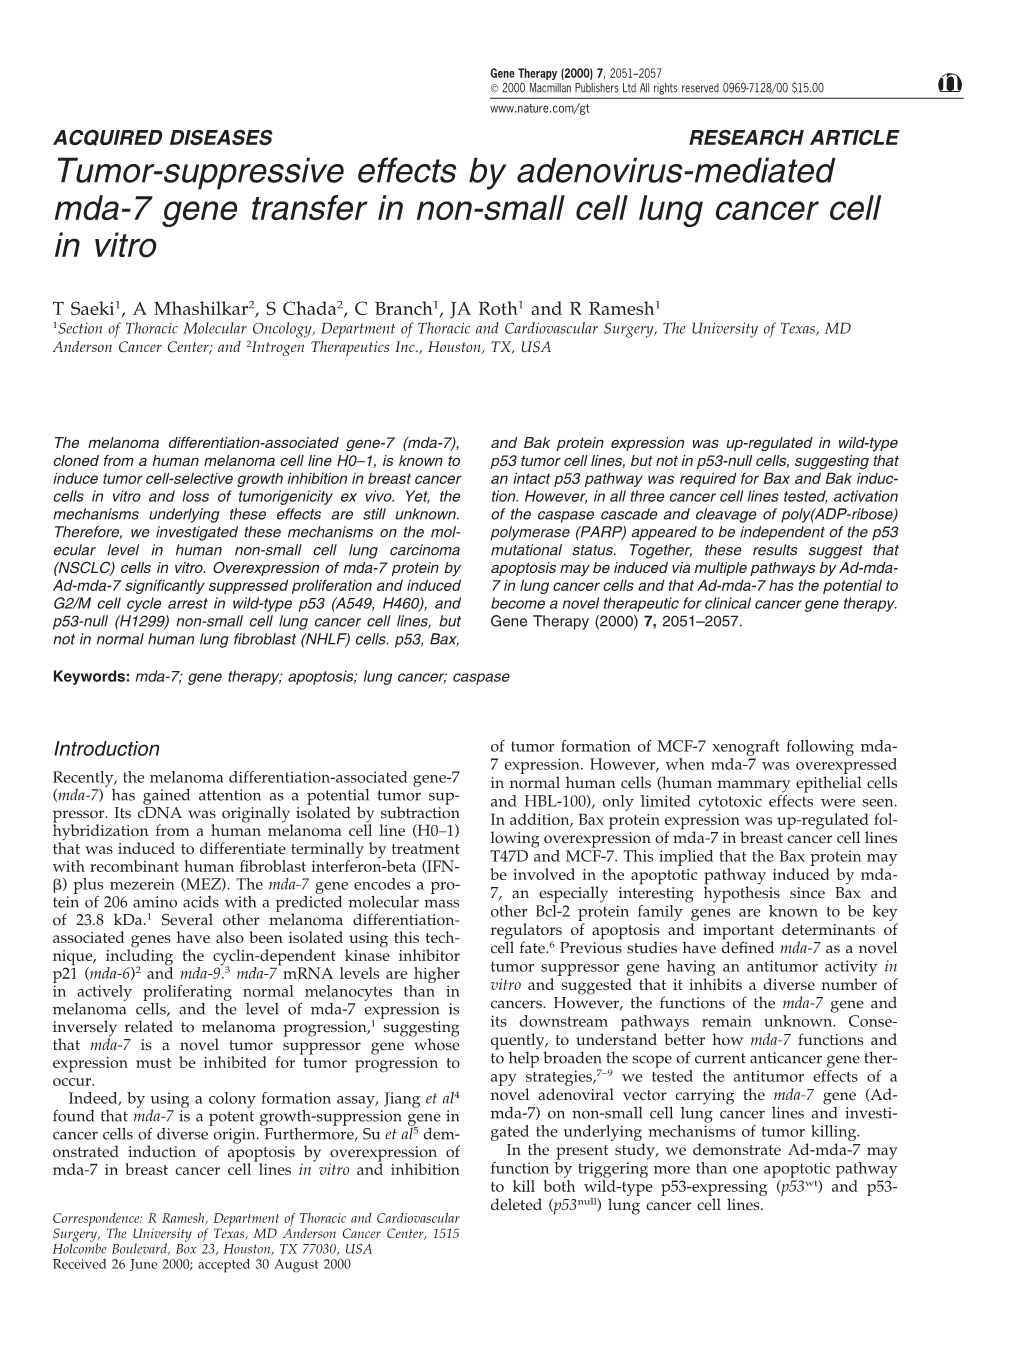 Tumor-Suppressive Effects by Adenovirus-Mediated Mda-7 Gene Transfer in Non-Small Cell Lung Cancer Cell in Vitro